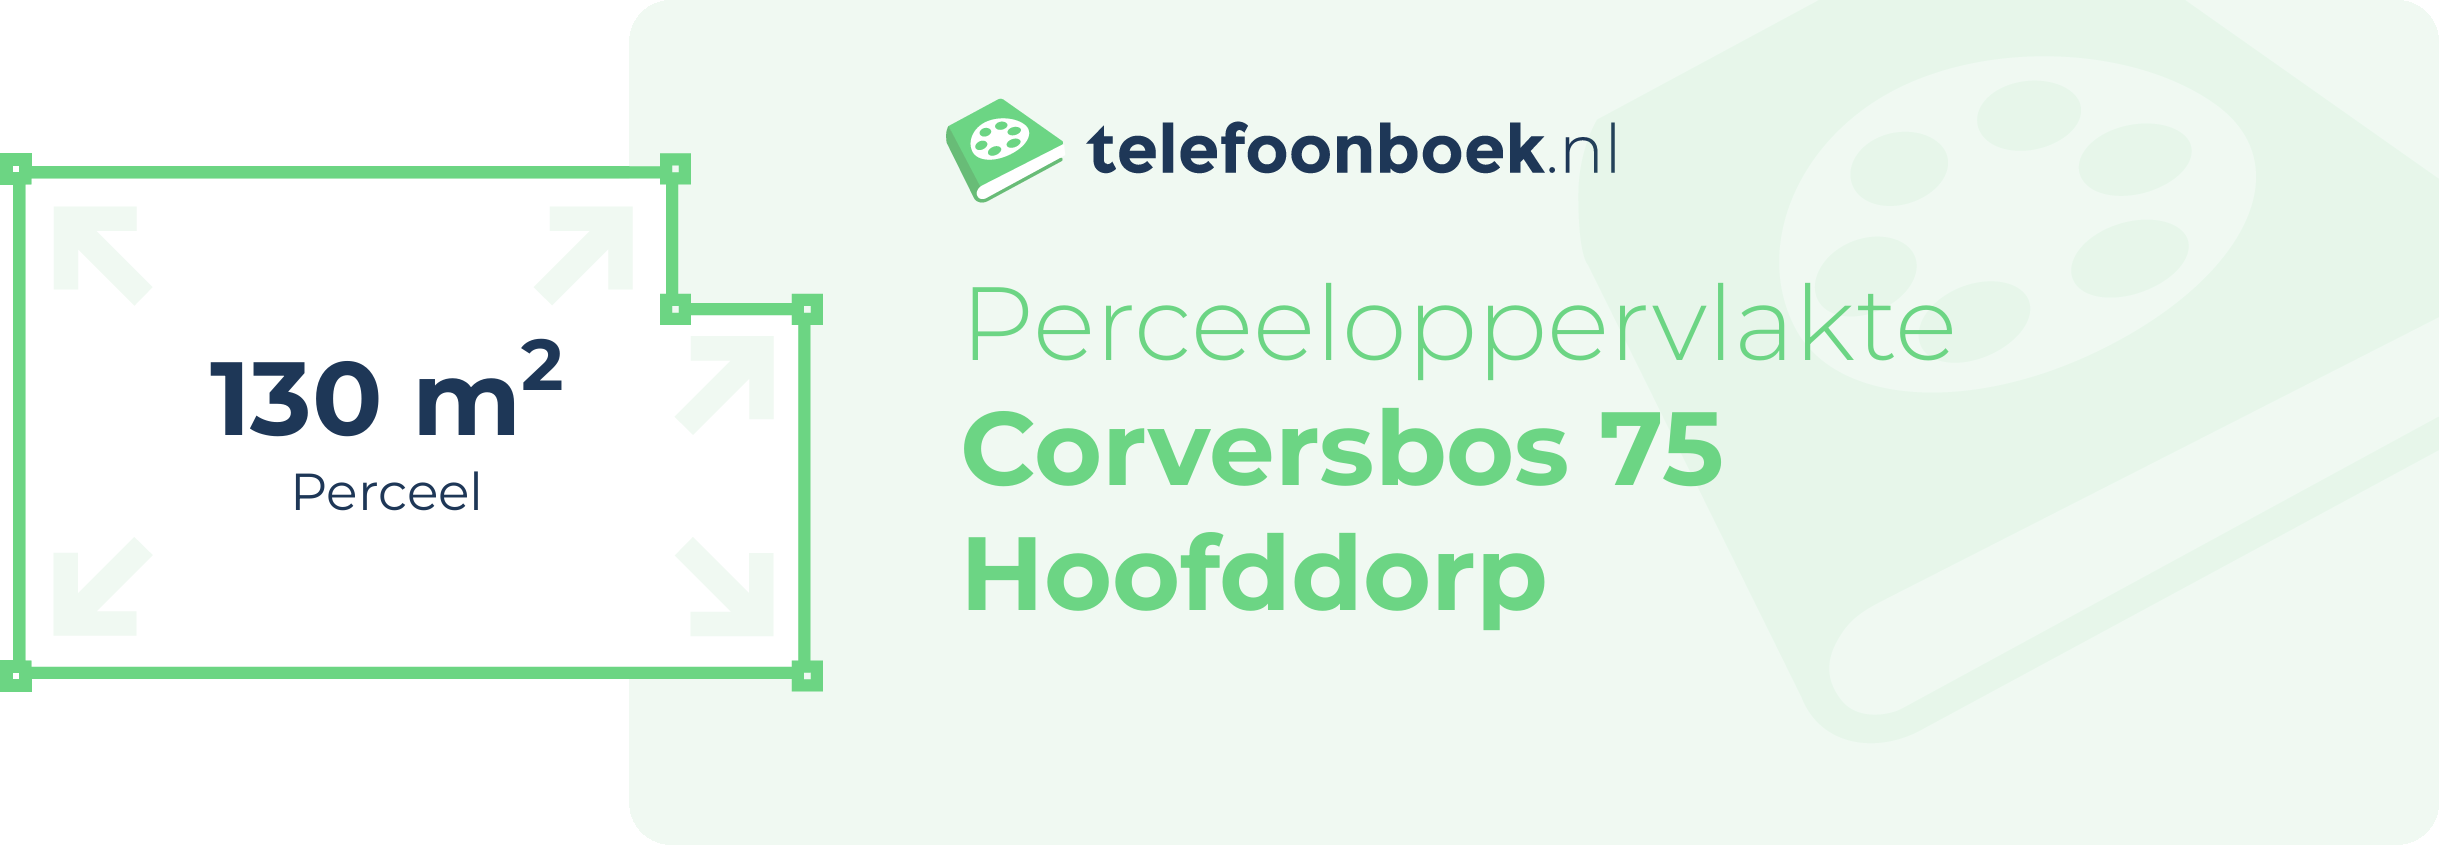 Perceeloppervlakte Corversbos 75 Hoofddorp